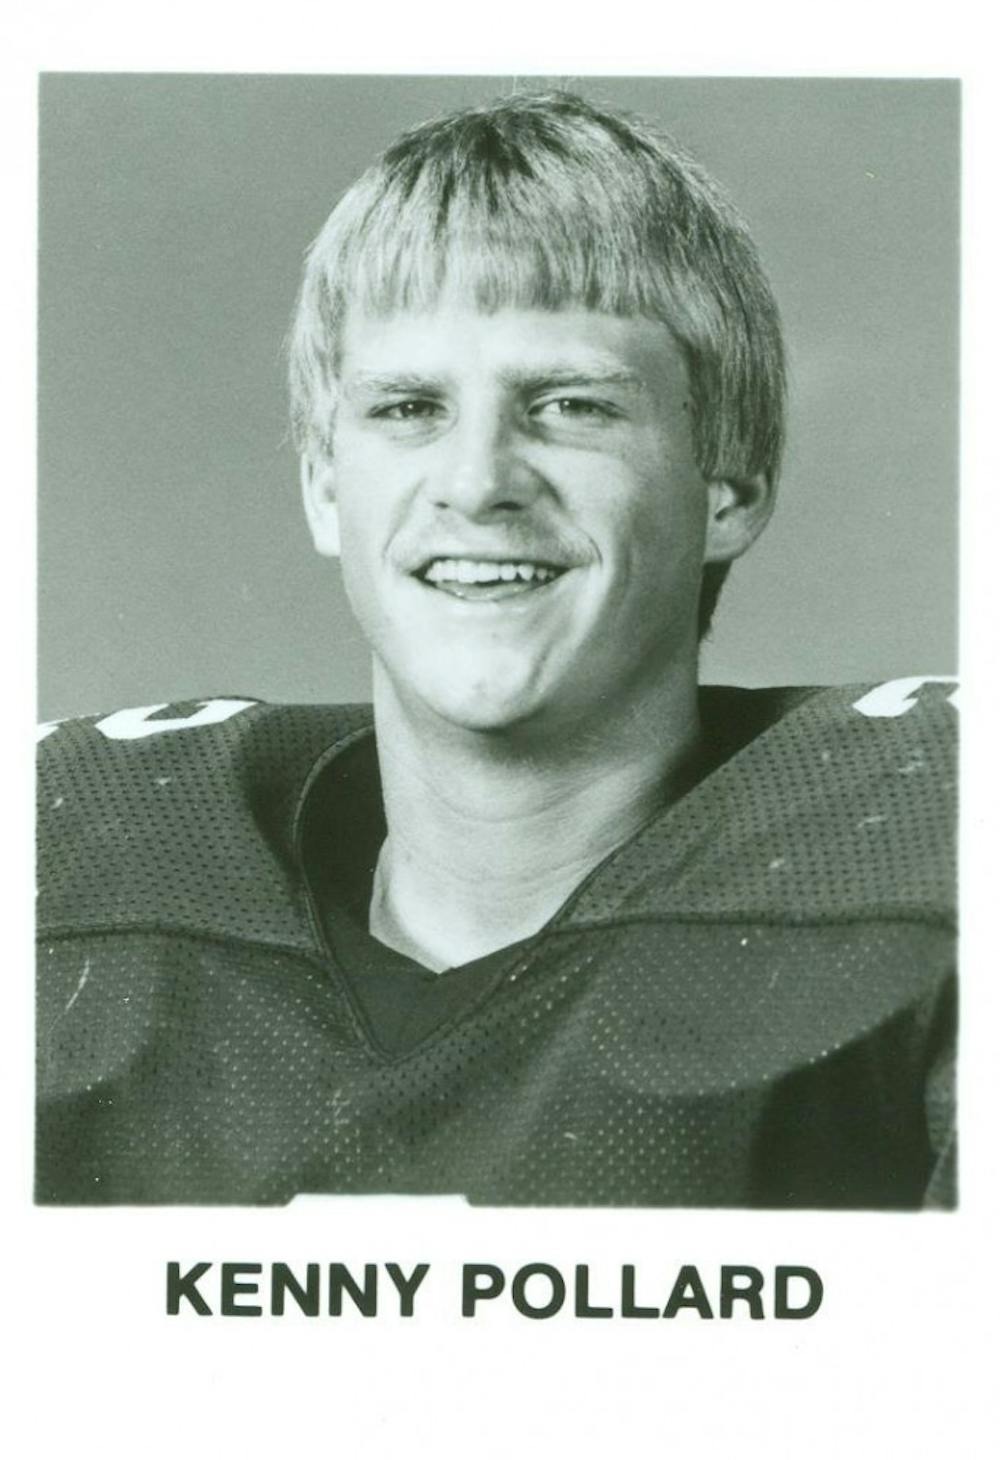 <p>Kenneth "Kenny" Pollard from the 1985 Auburn football freshmen photo. Via Auburn Athletics archives.</p>